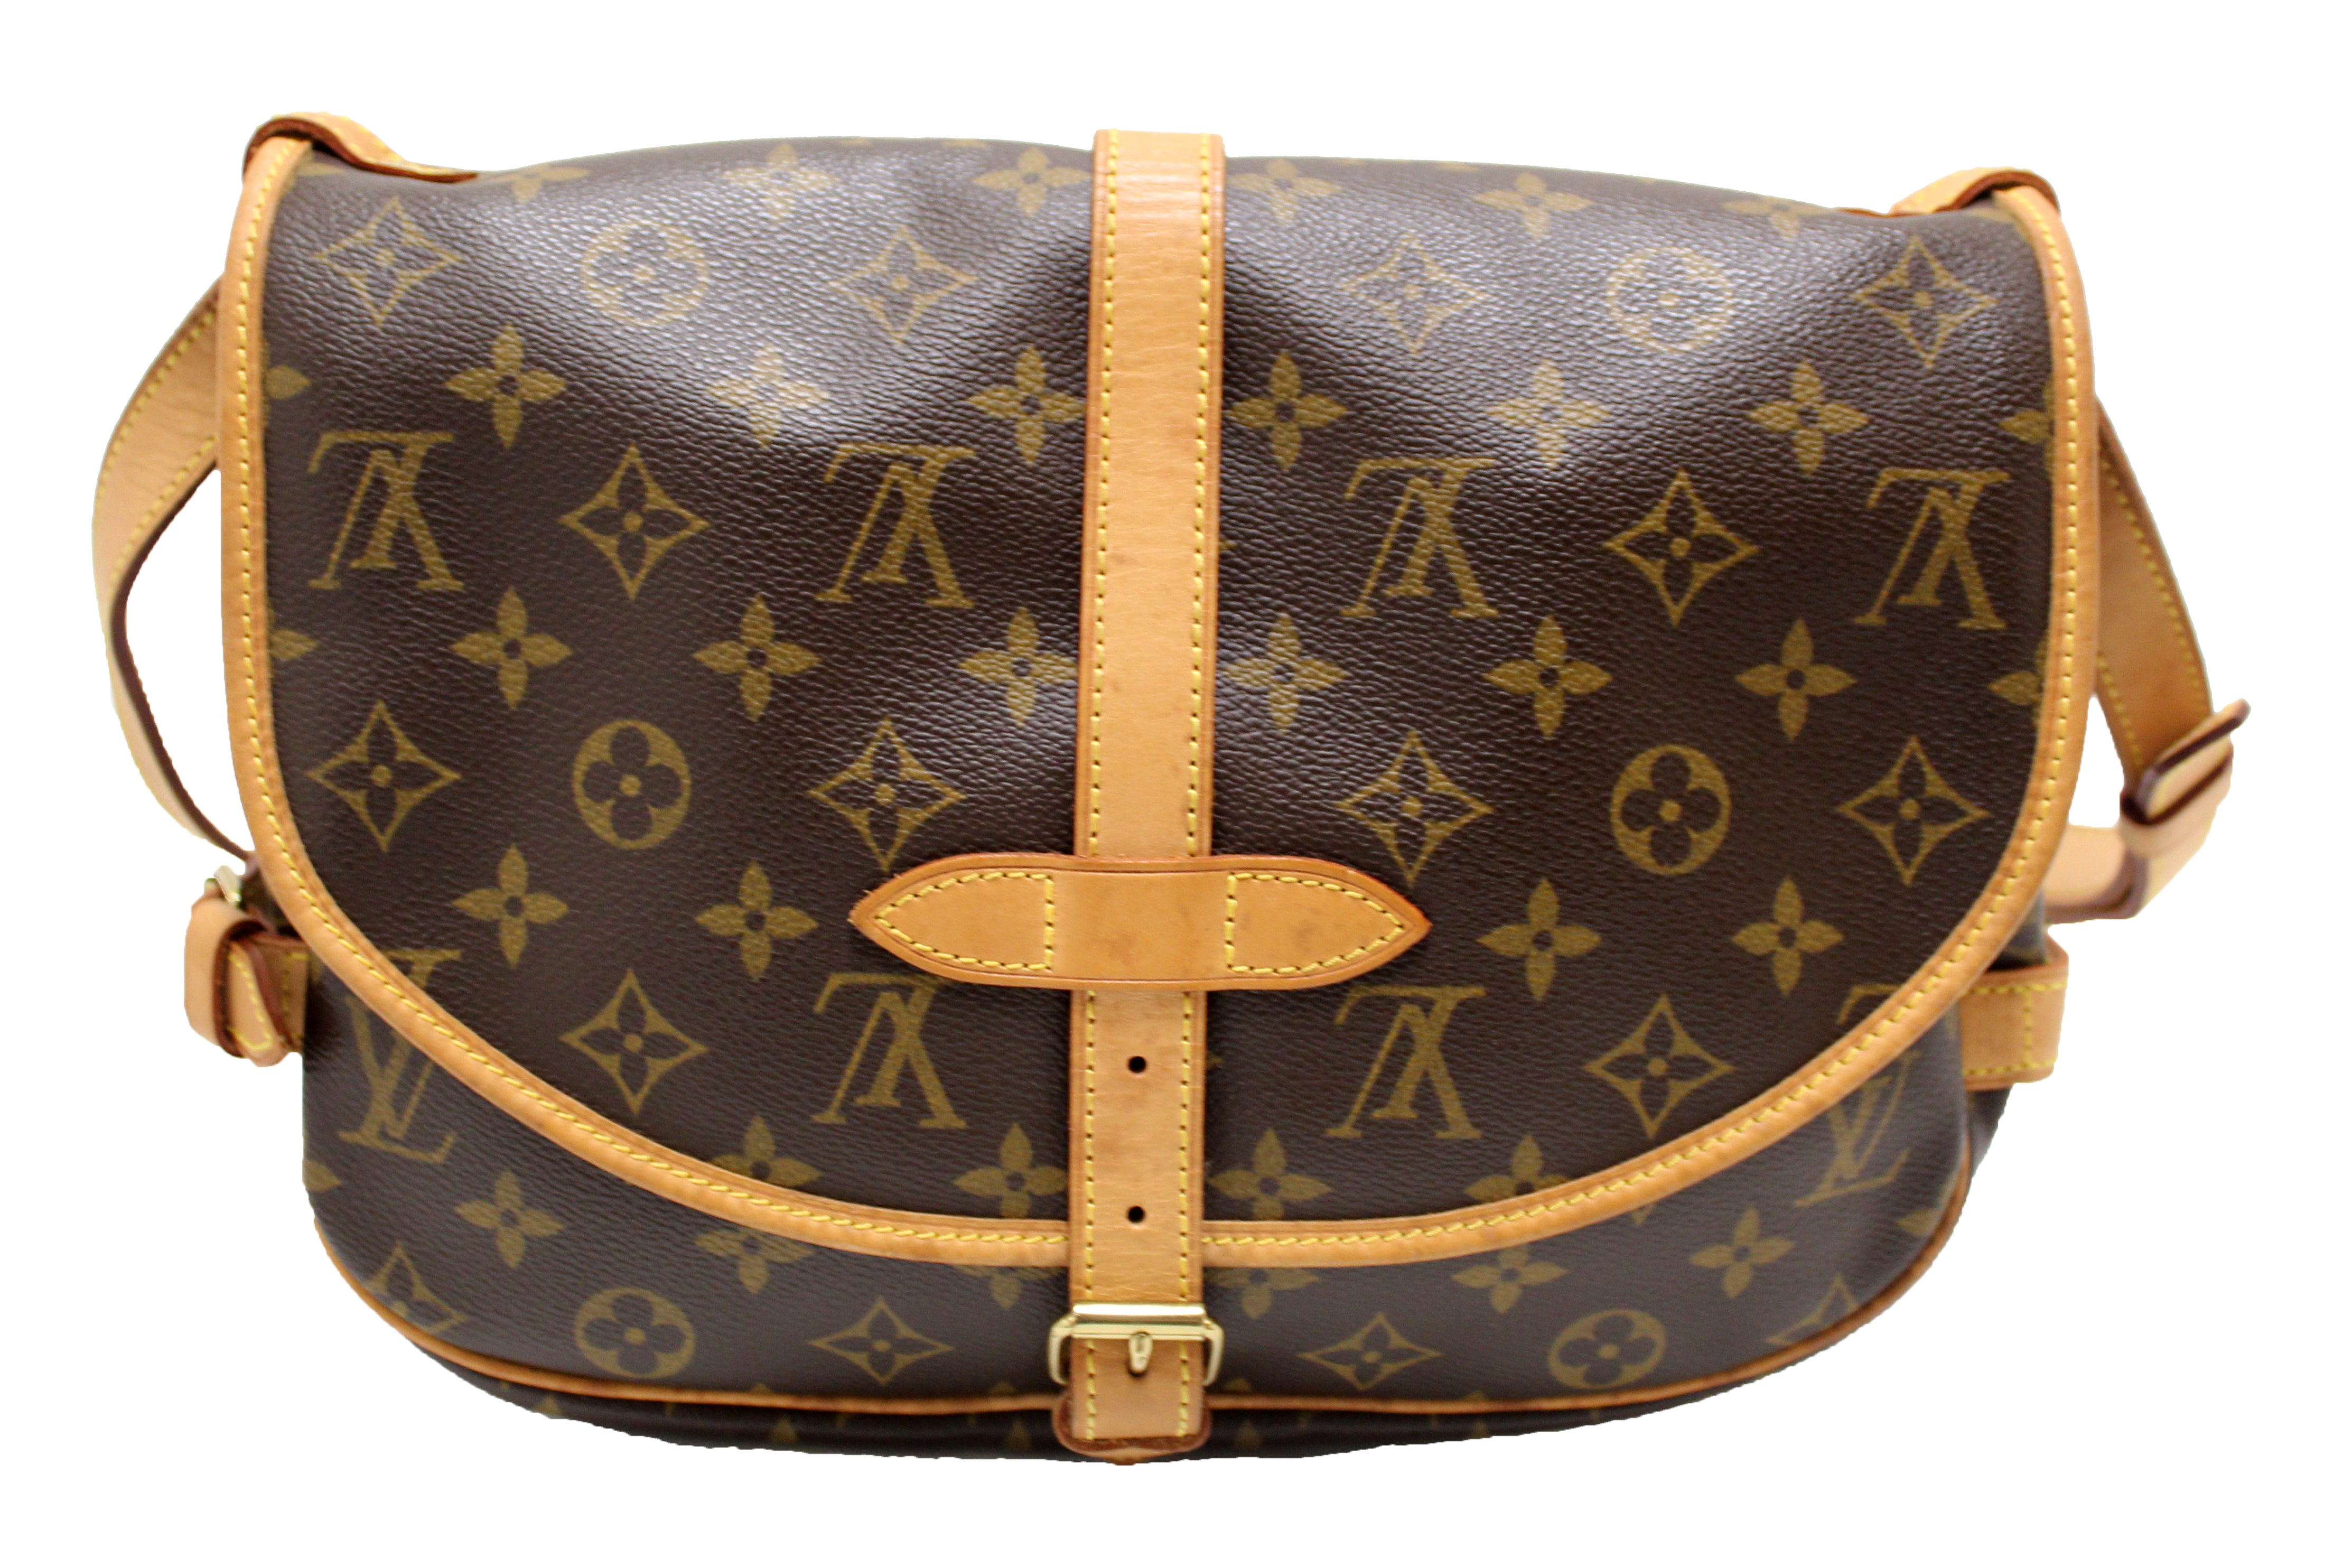 Louis Vuitton Saumur luxury designer handbags - price guide and values